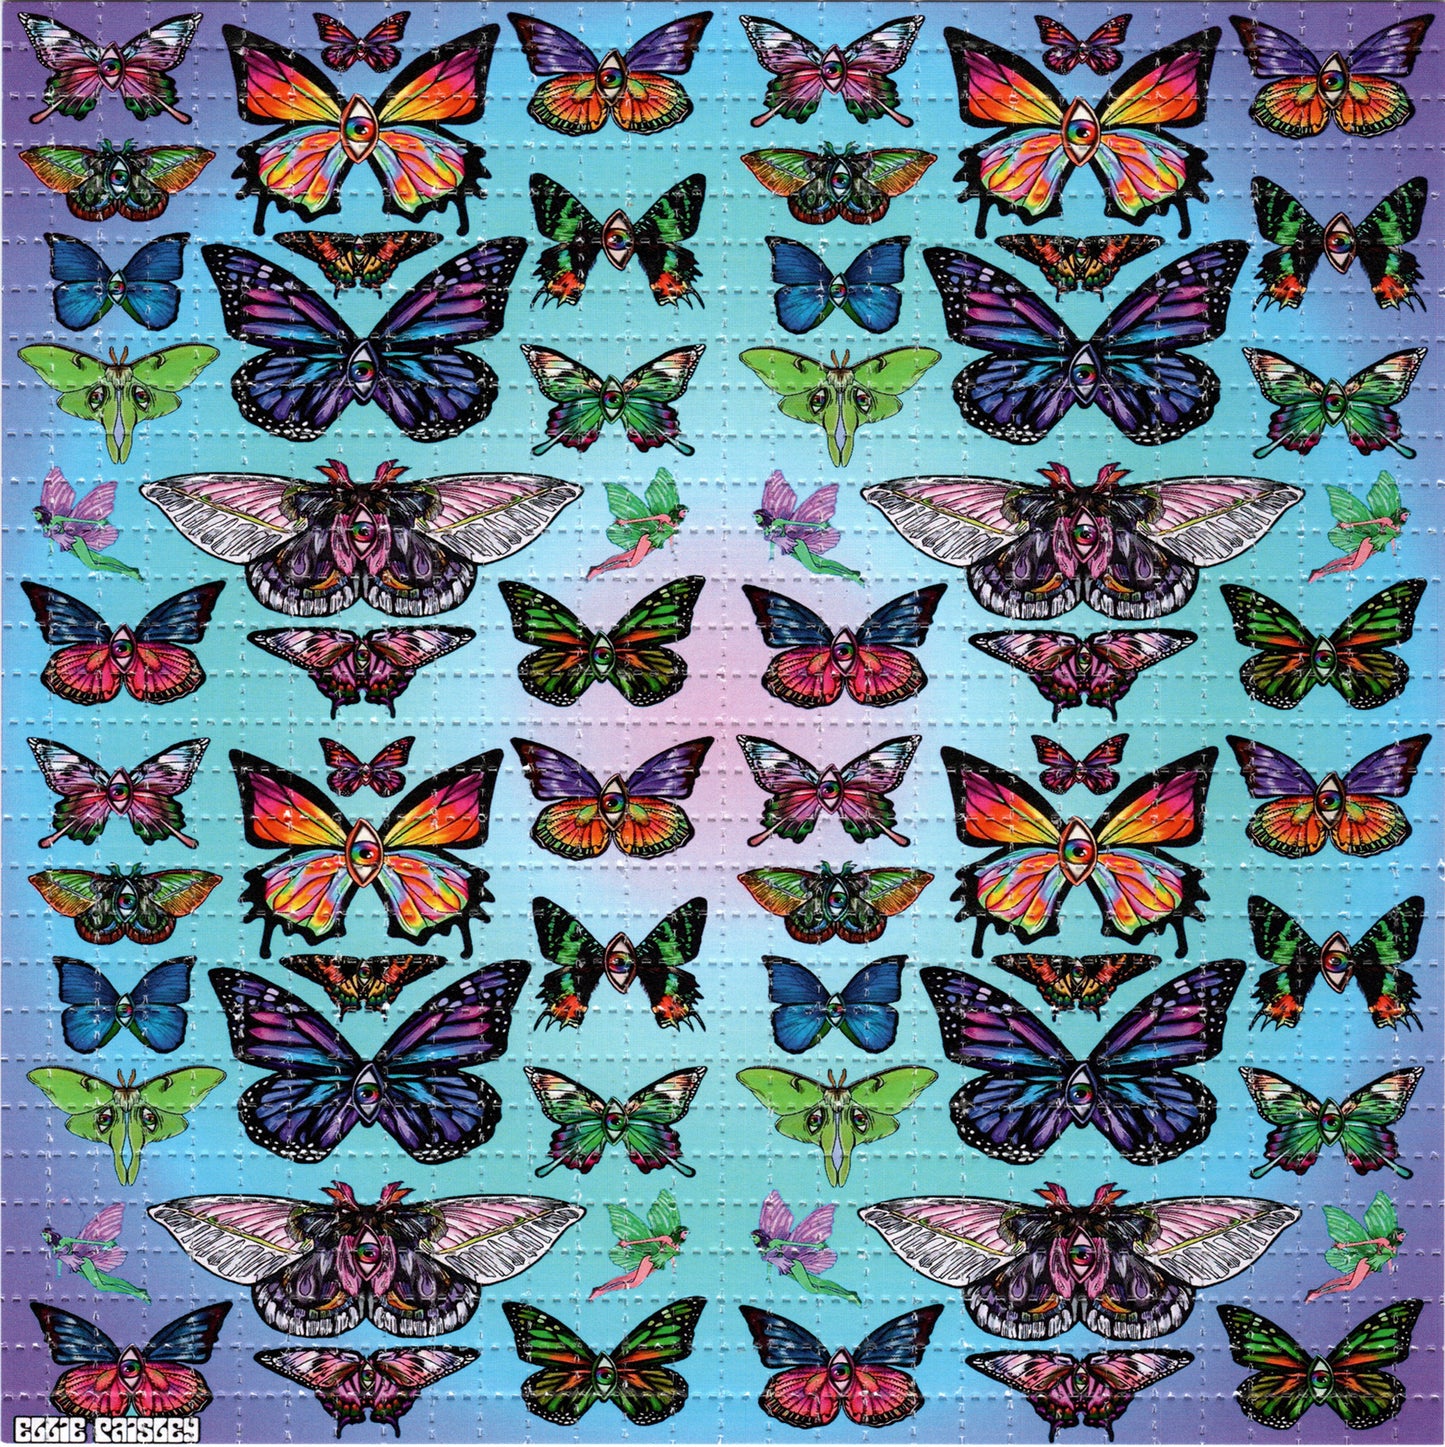 Butterfleye by Ellie Paisley Brooks Signed Limited Edition LSD blotter art print